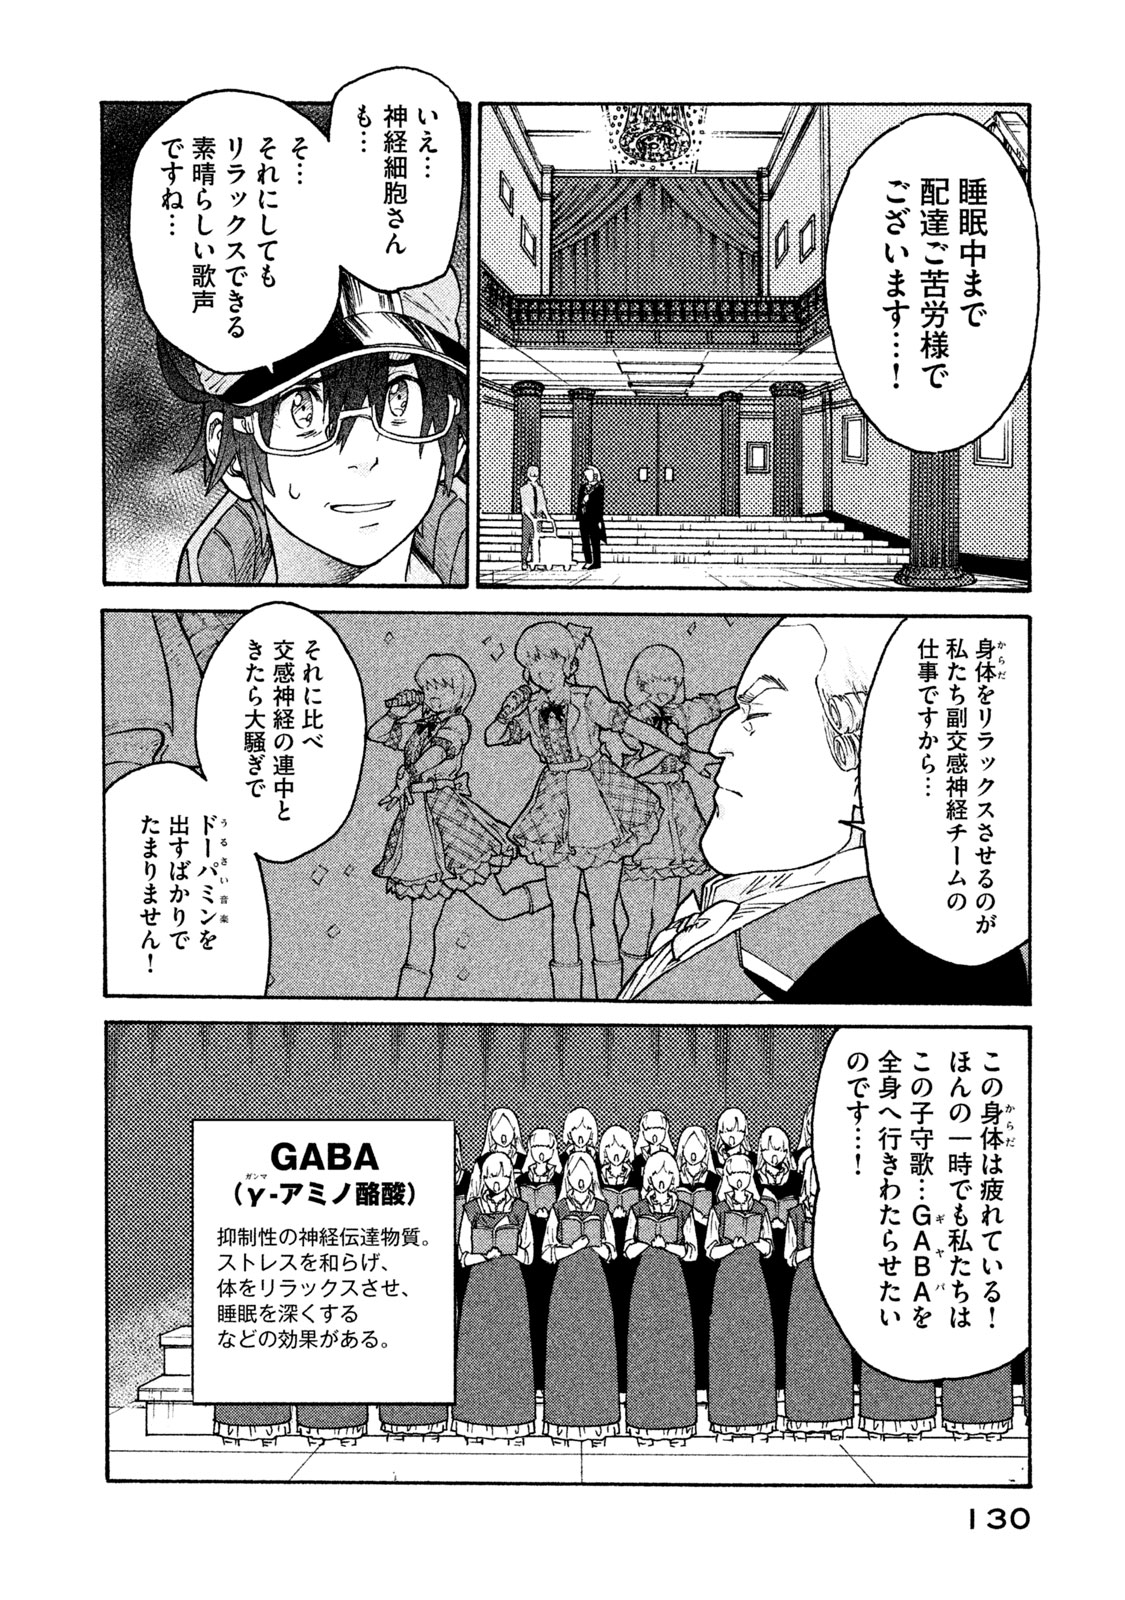 Hataraku Saibou BLACK - Chapter 31 - Page 6